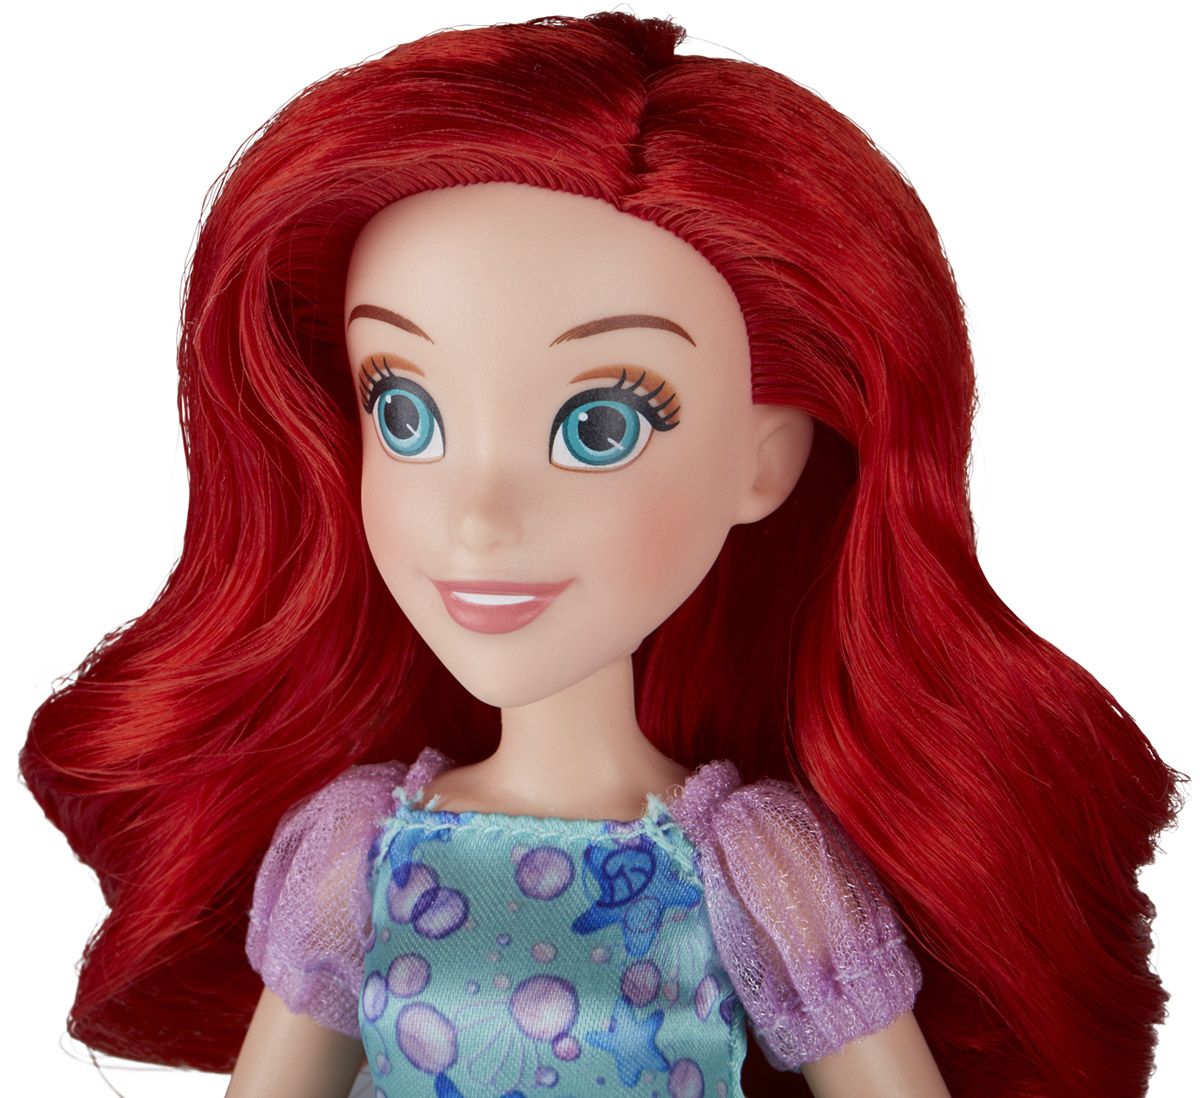 Disney Princess  Royal Shimmer Ariel